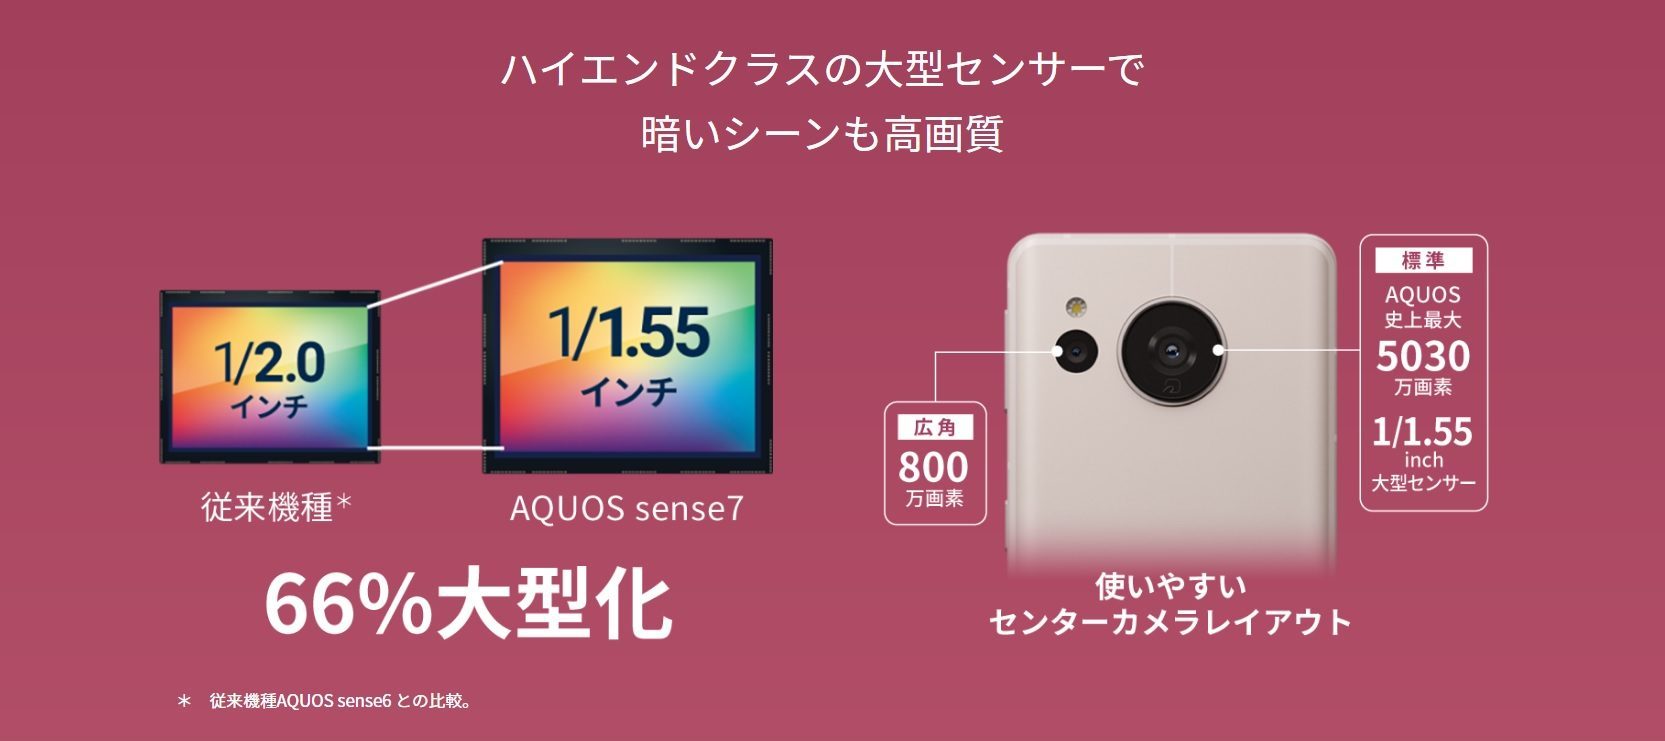 AQUOS sense7のカメラ